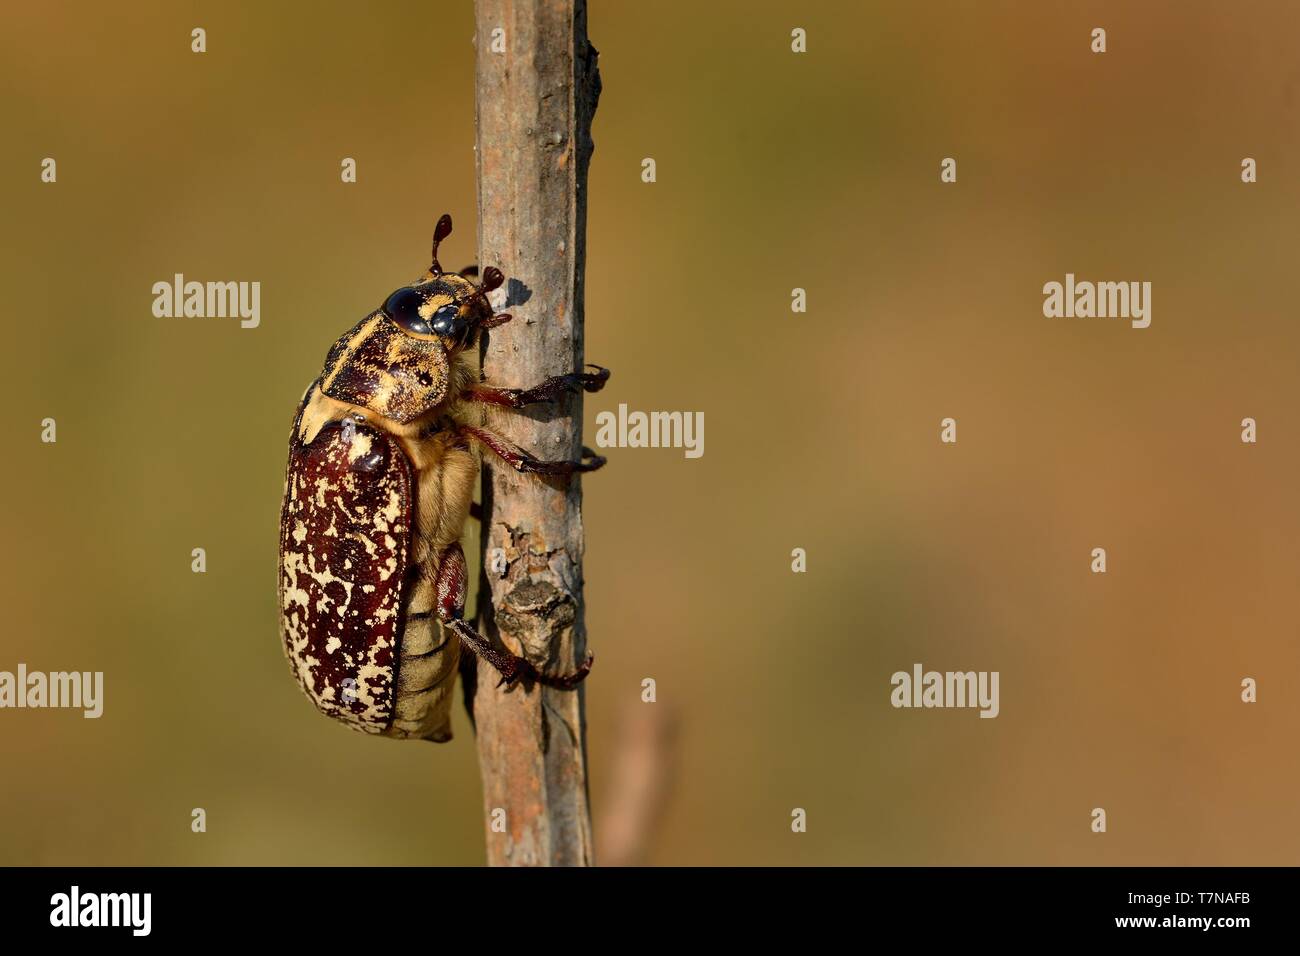 Polyphylla fullo - beetle in Hungary, Europe Stock Photo